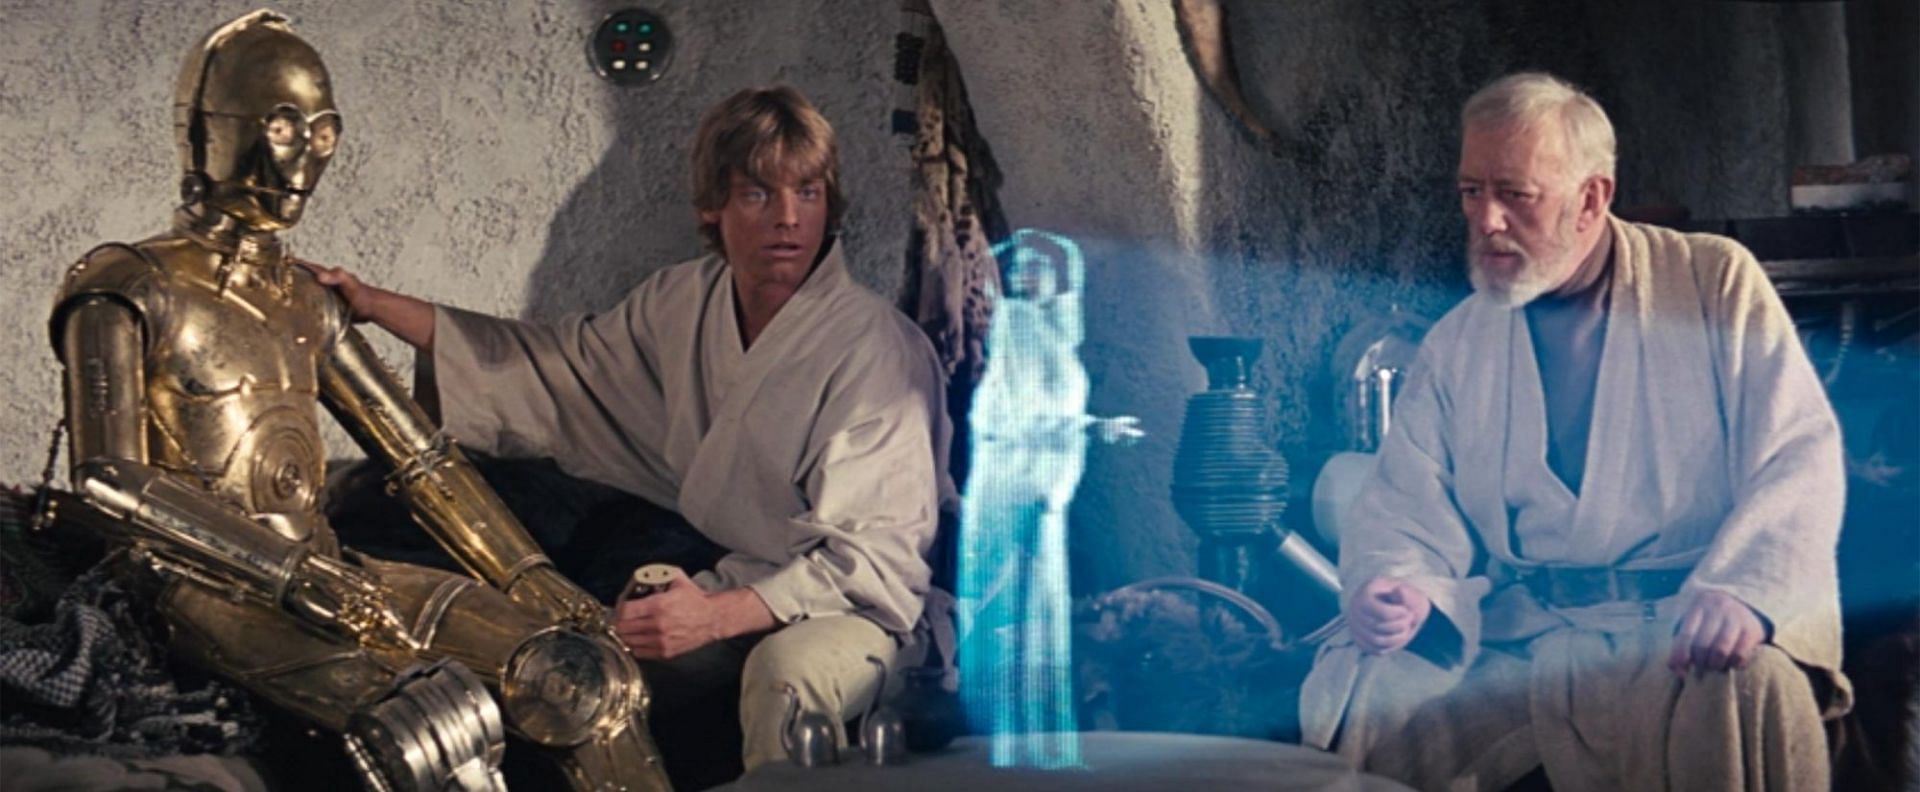 Luke Skywalker meets Obi-Wan Kenobi and learns about the Force (Image via Lucasfilm)